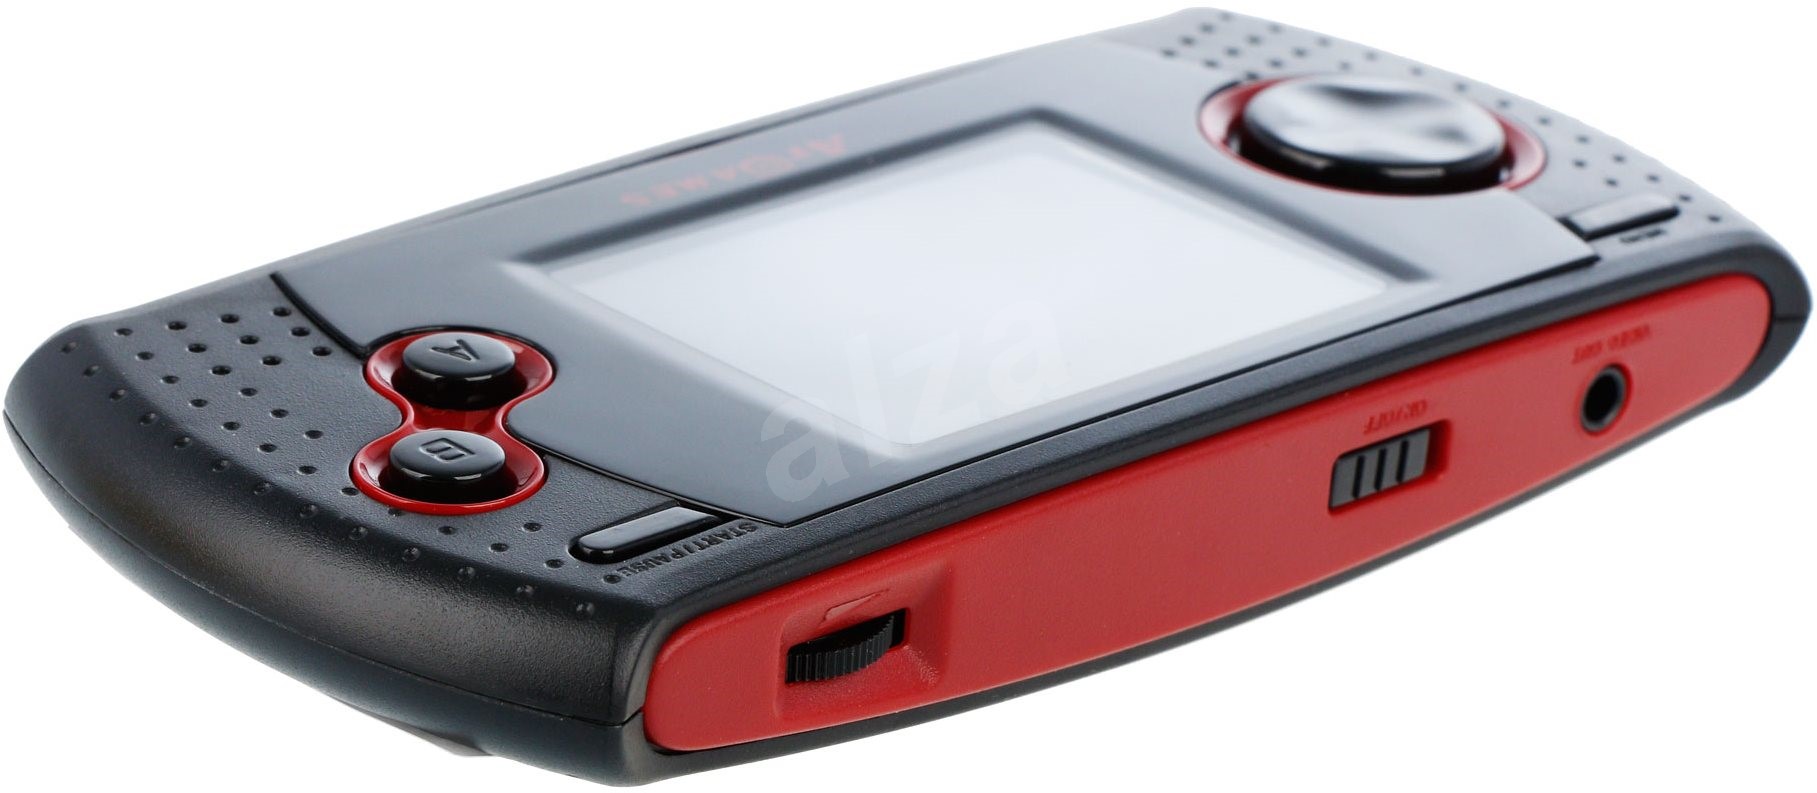 Sega master system handheld